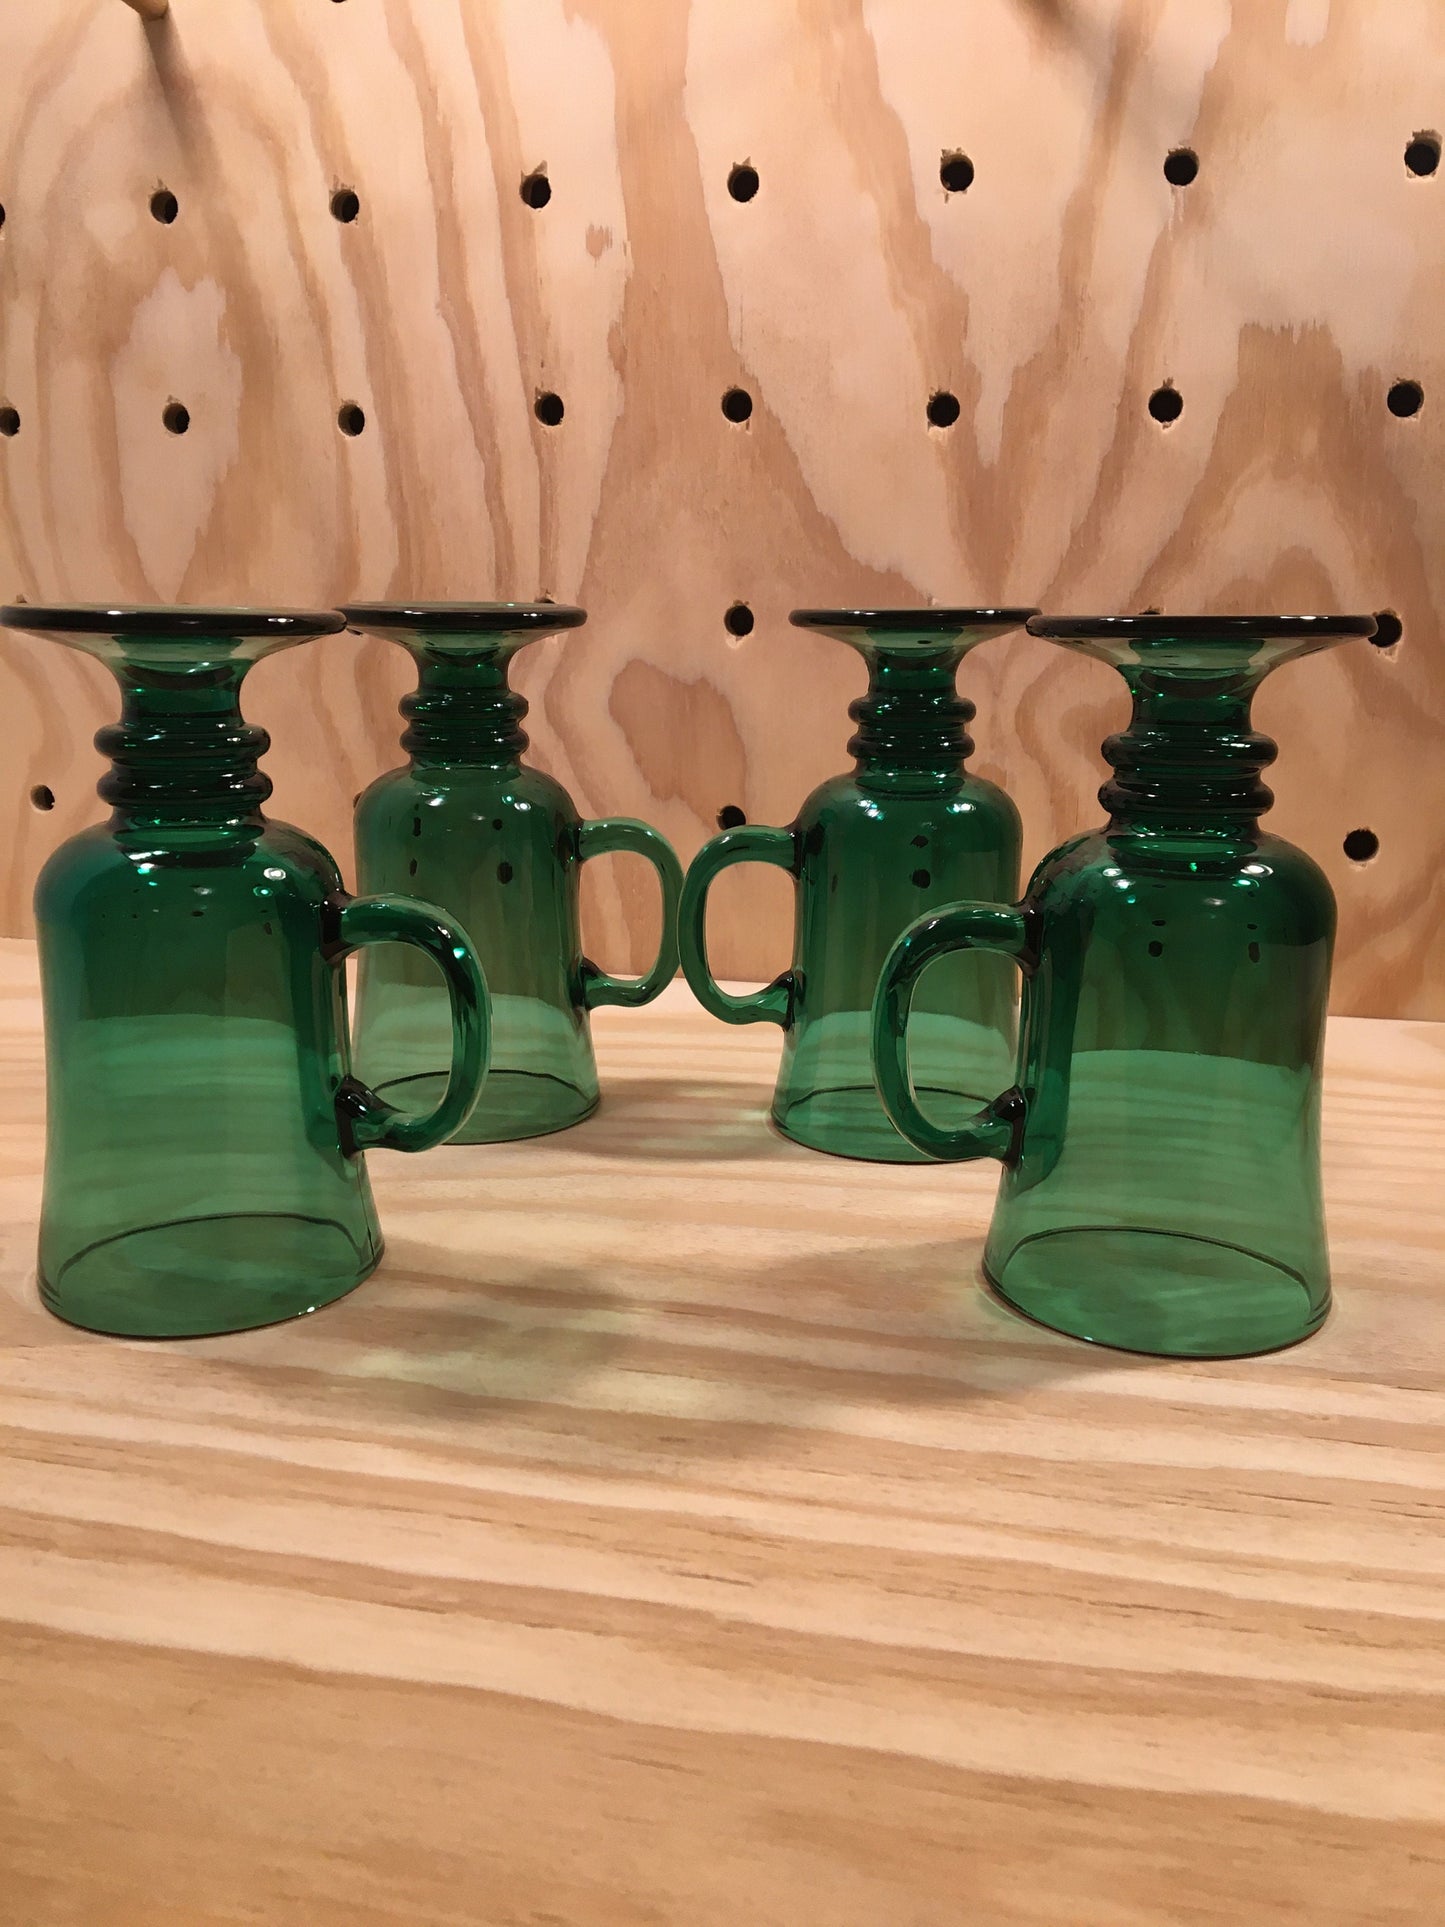 Set of 4 - Vintage Emerald Green Glass Mugs